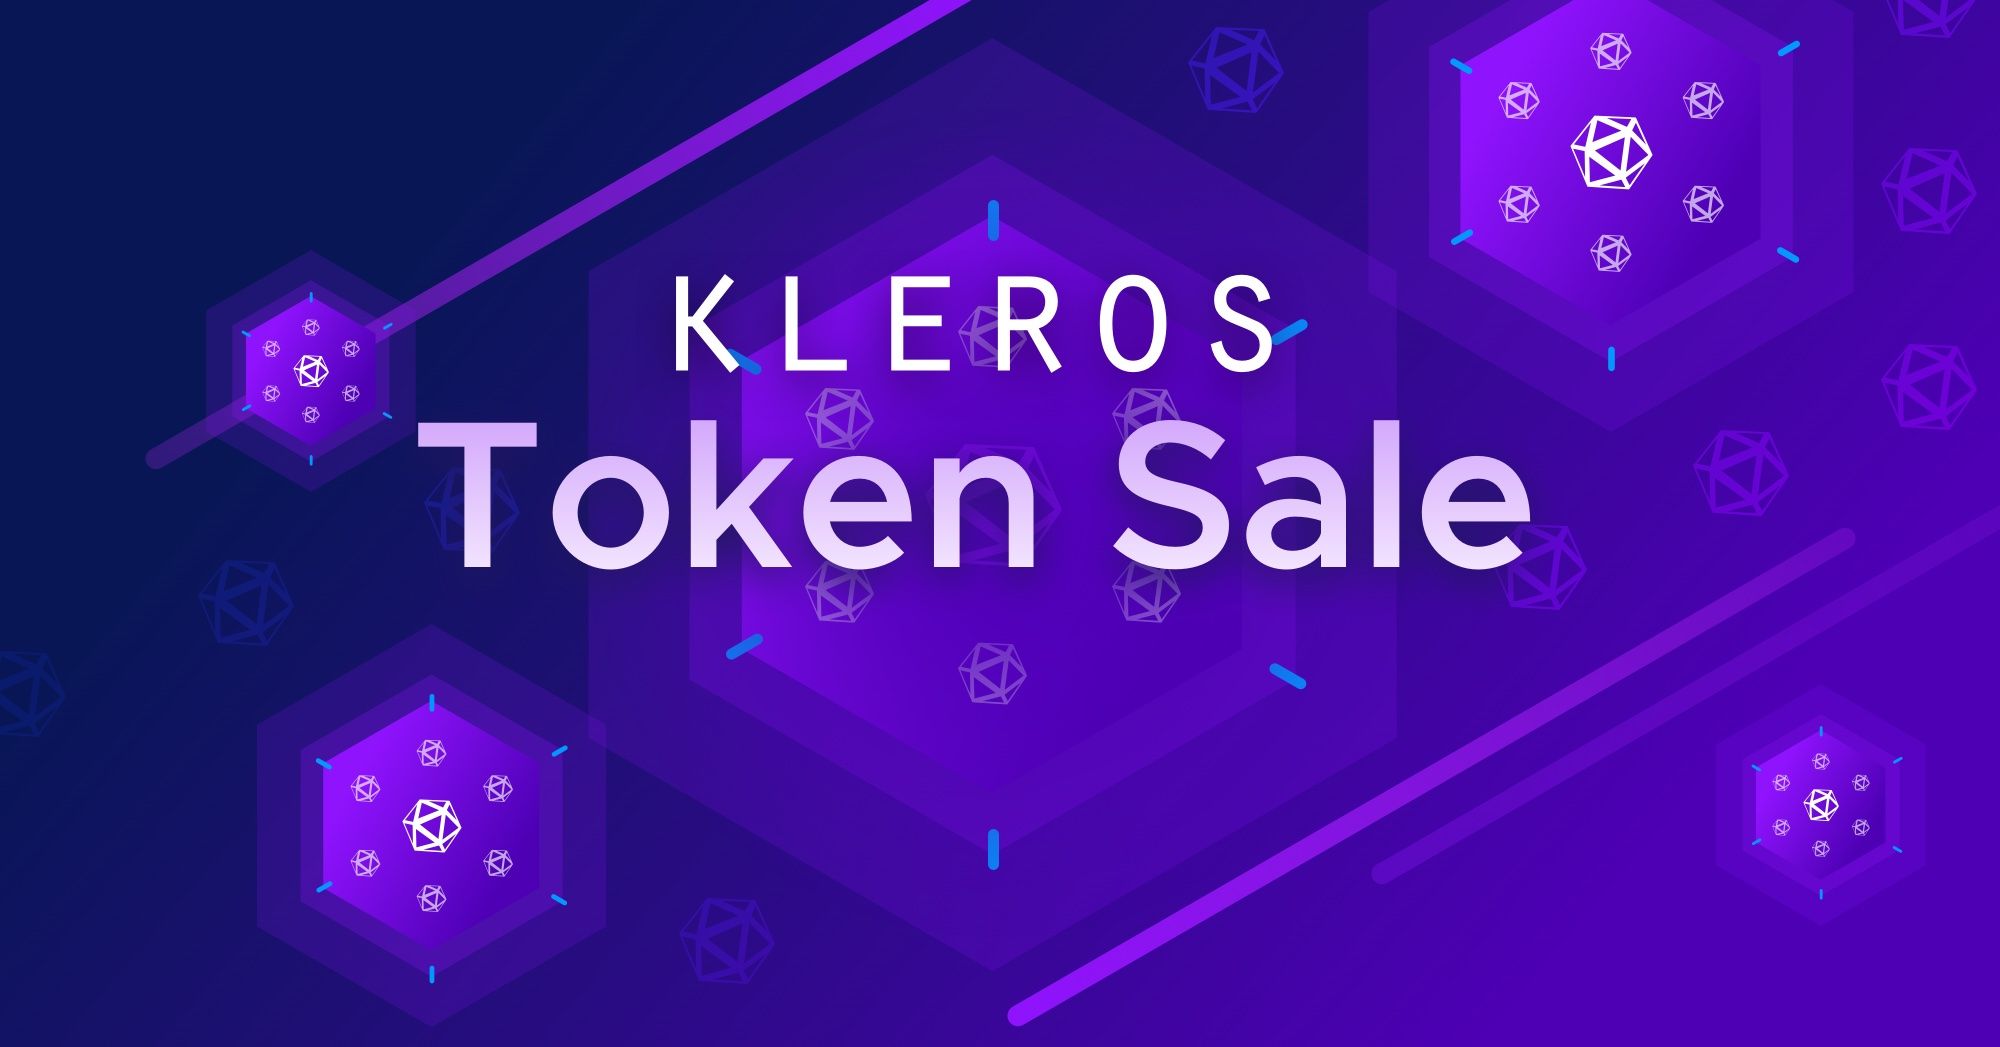 Kleros Token Sale Announcement, January 11, 2020